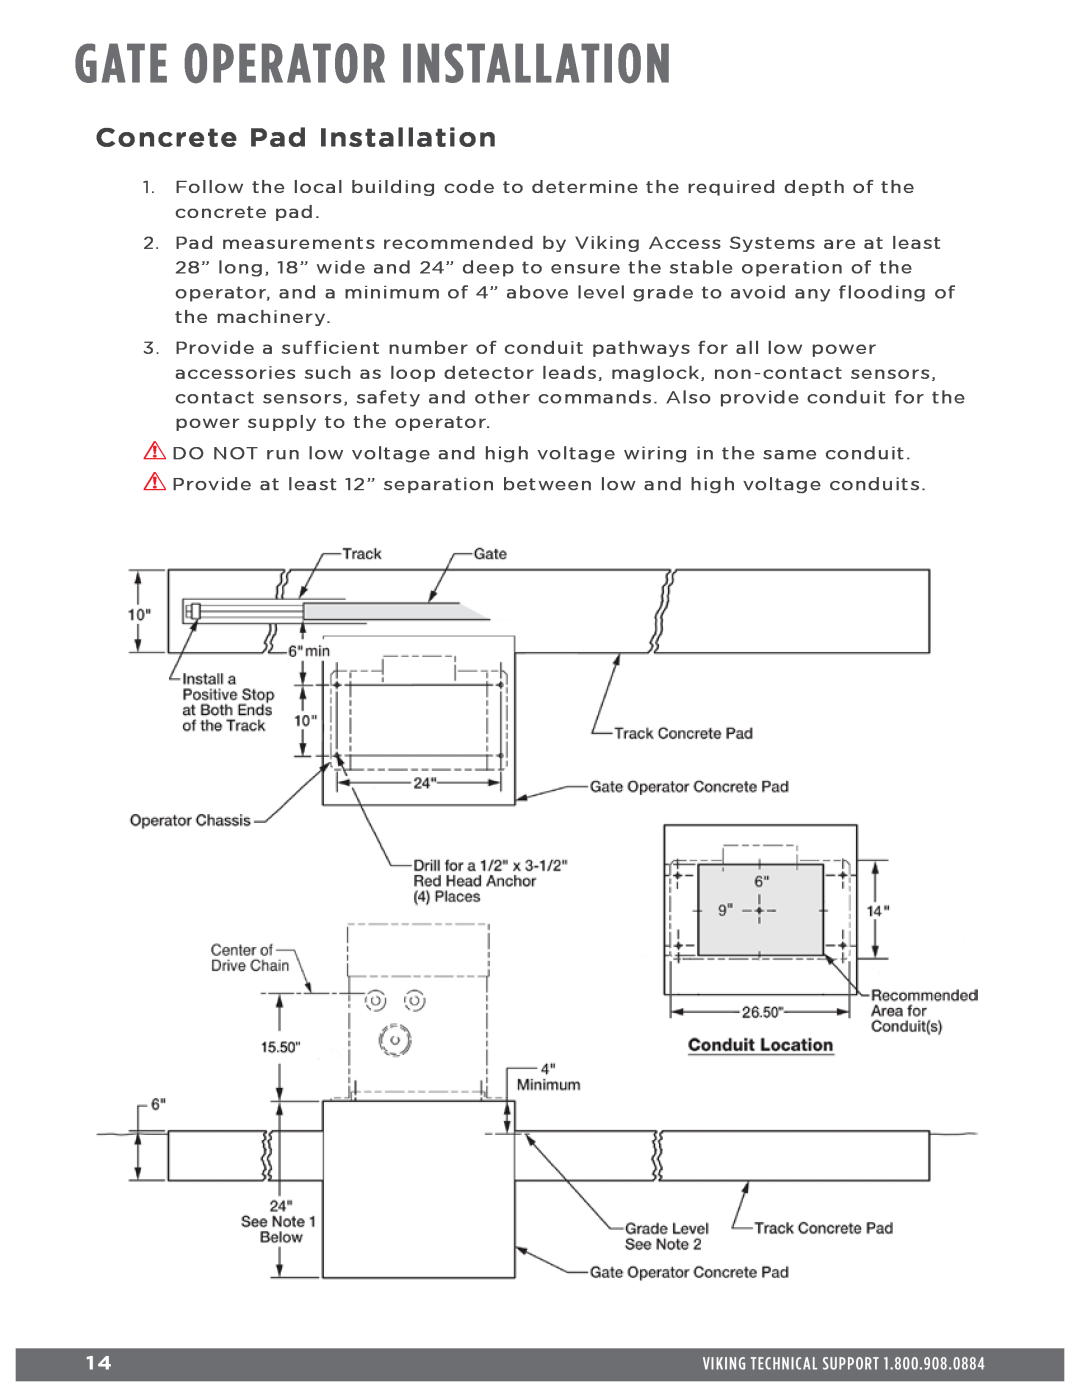 Viking Access Systems Q7 manual Gate Operator Installation, Concrete Pad Installation 